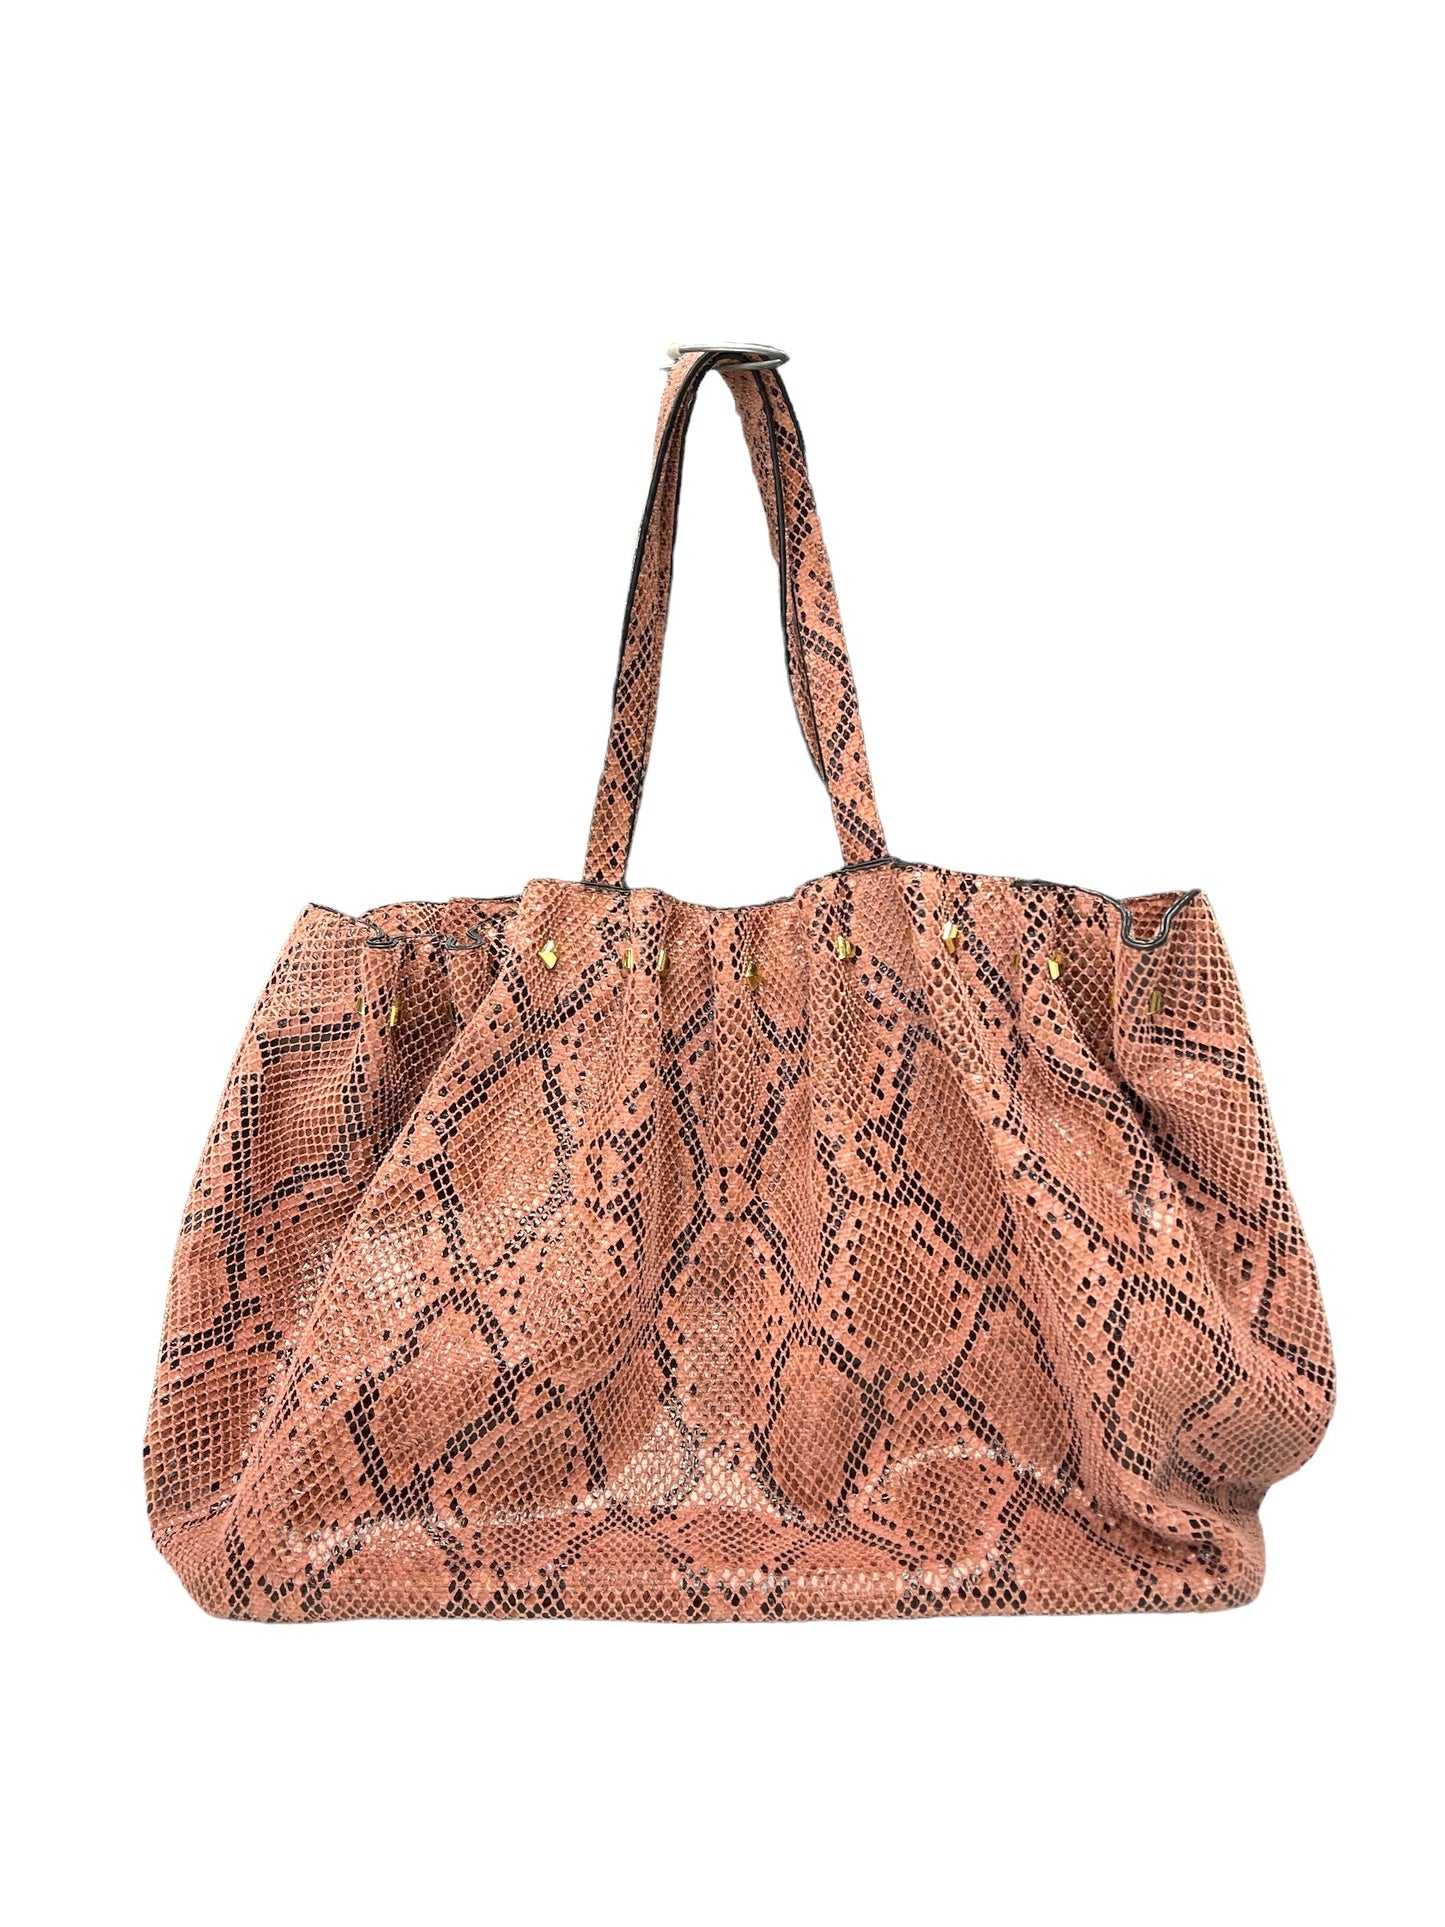 Handbag Designer By INZI  Size: Large